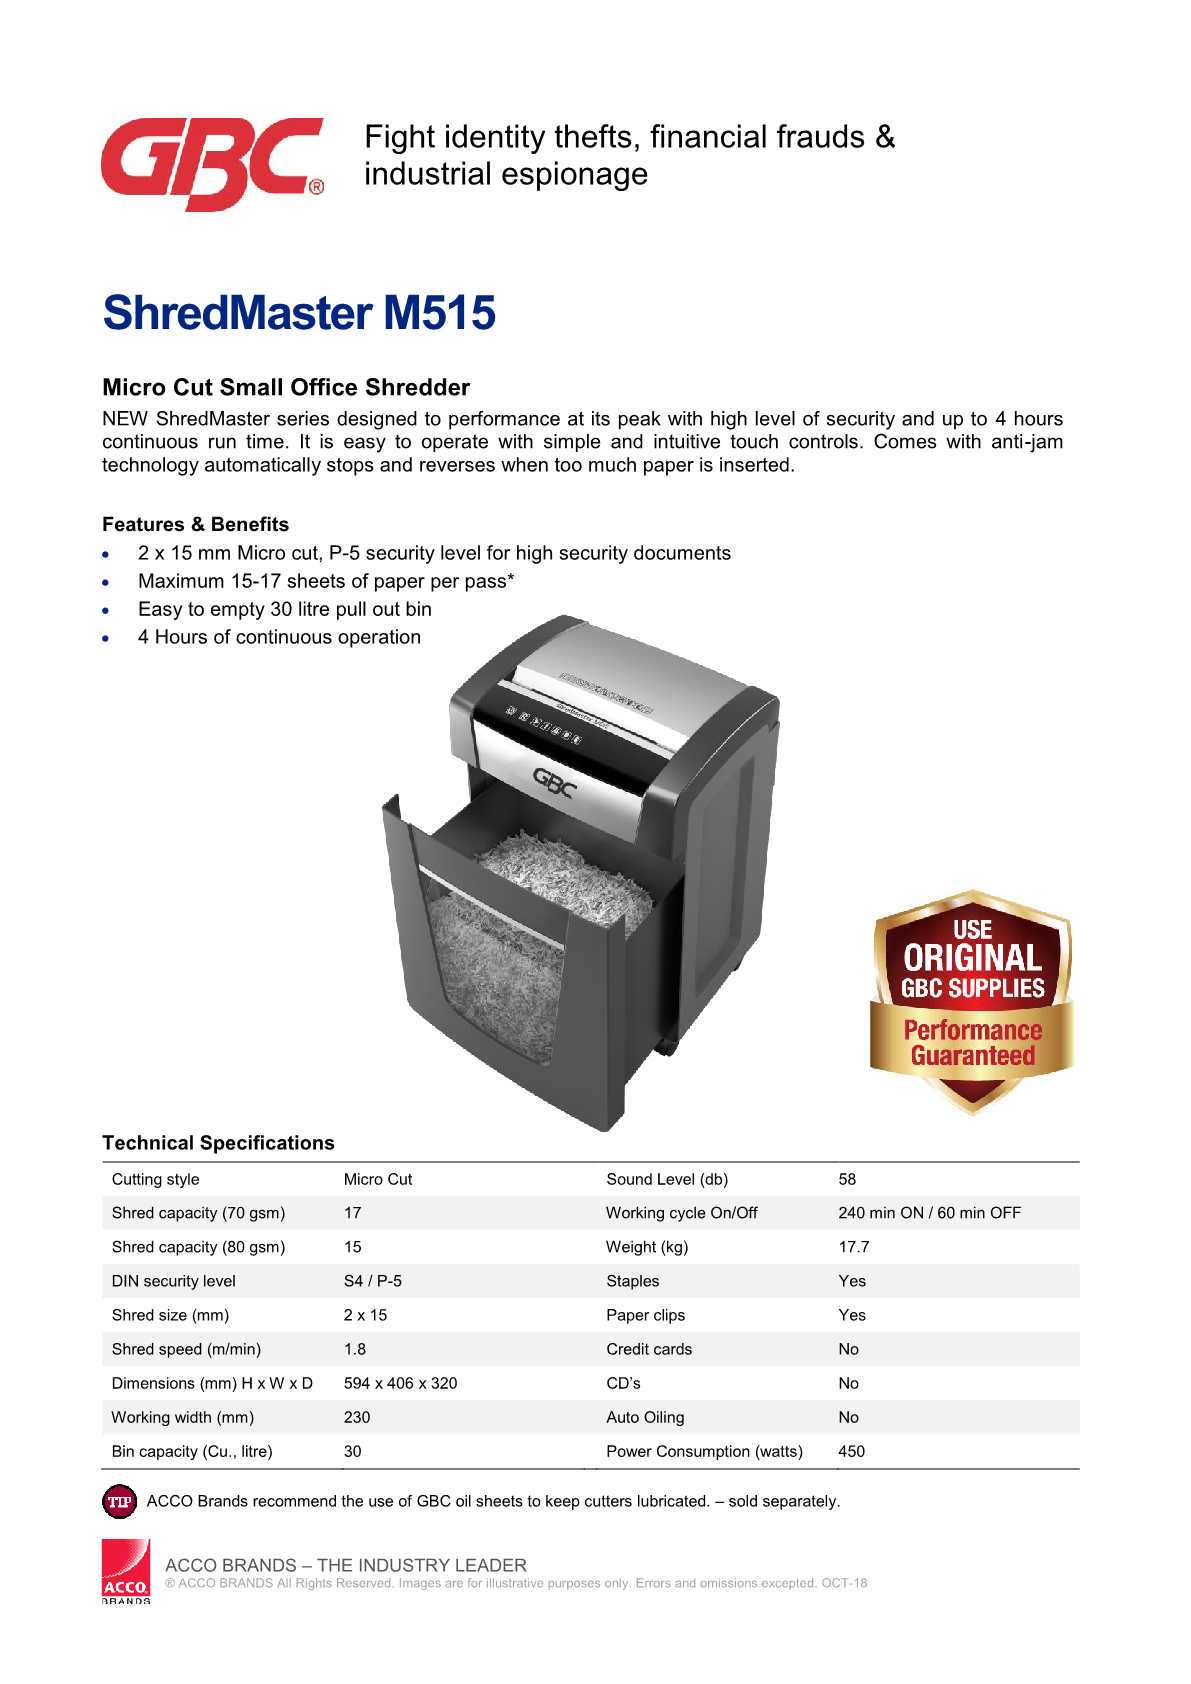 2018-datasheet-shredmaster-m515-r1.png